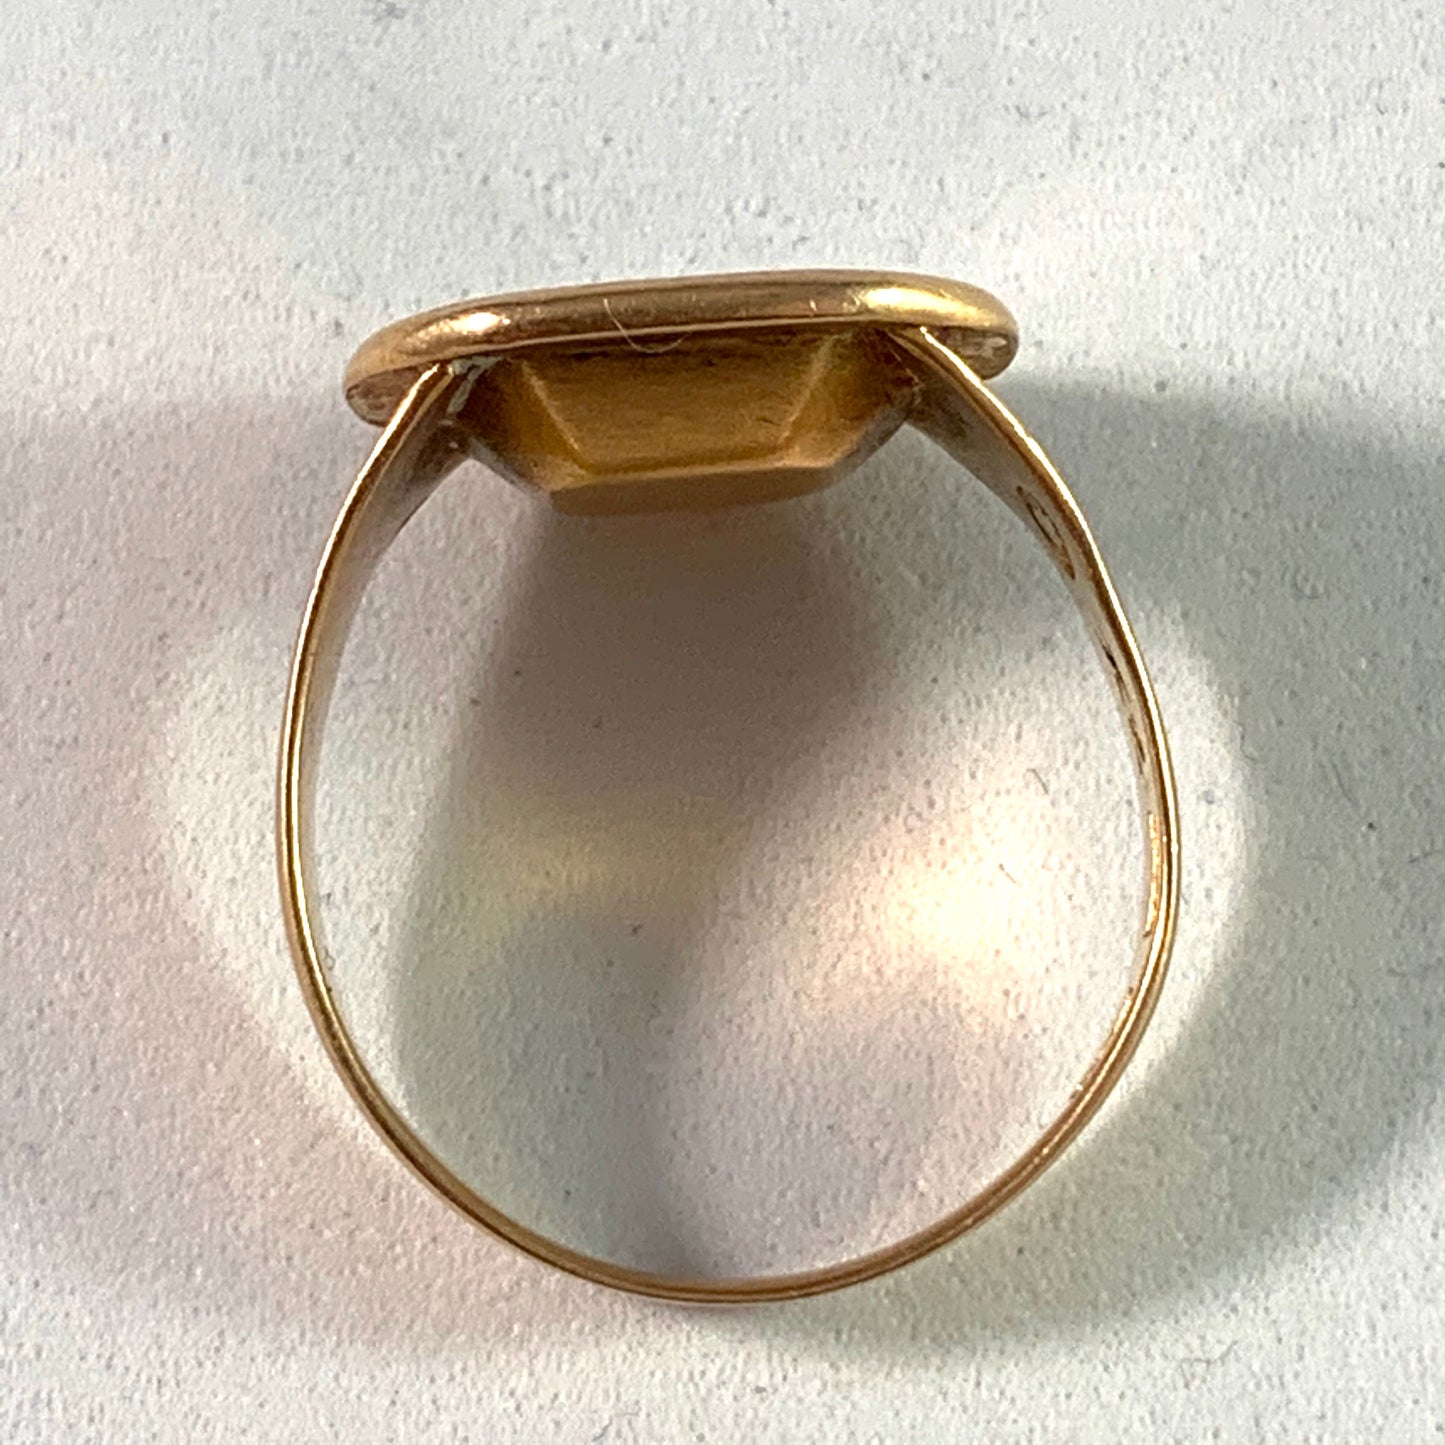 Fyrwald Selinder, Stockholm year 1804, Georgian 18k Gold Onyx Signet Mourning Ring.